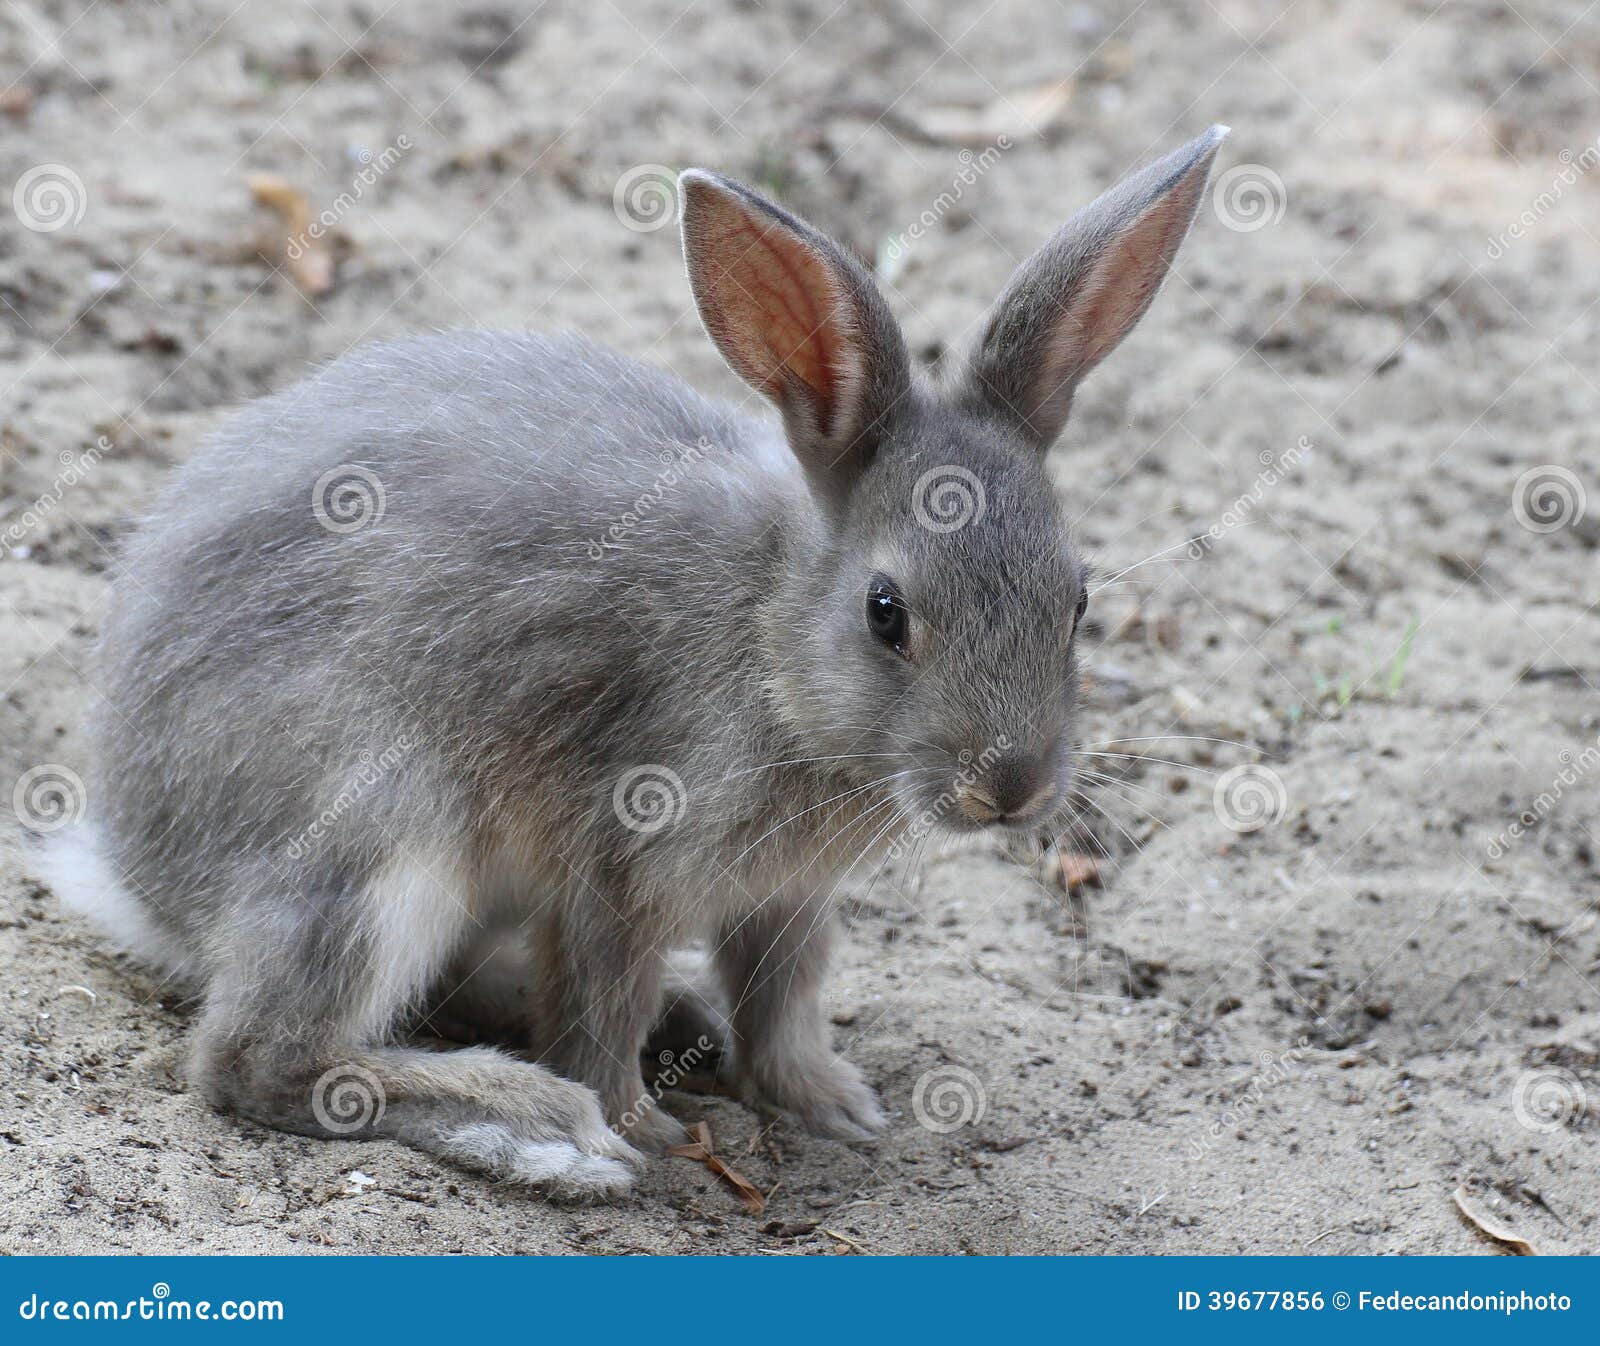 little rabbit ready to pounce forward